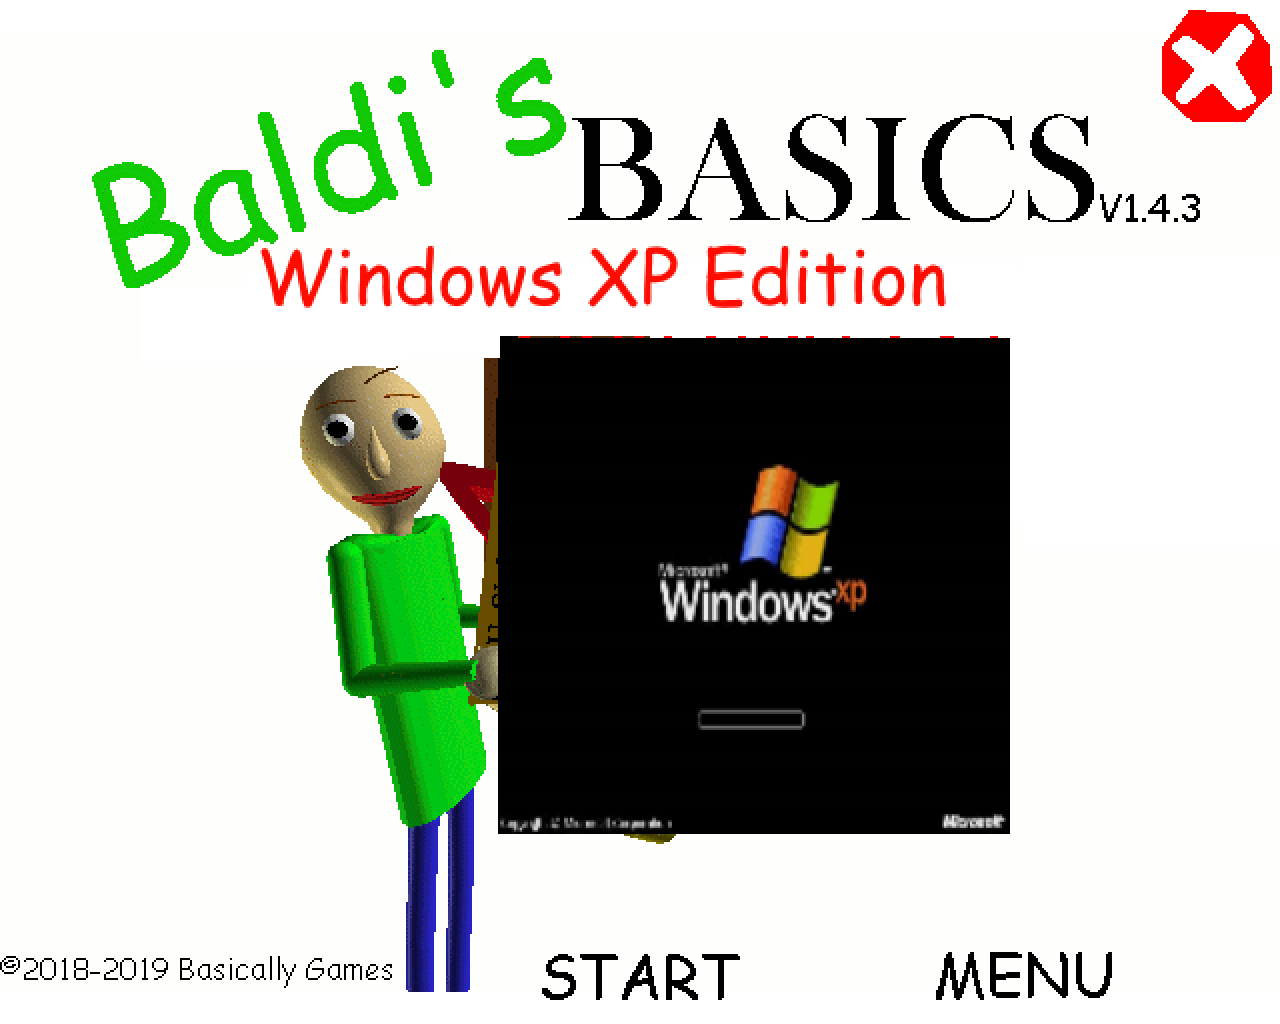 Baldis Basics Scratch Edition. Baldi Android. Baldis Basics Exclusive Edition. Basically games.